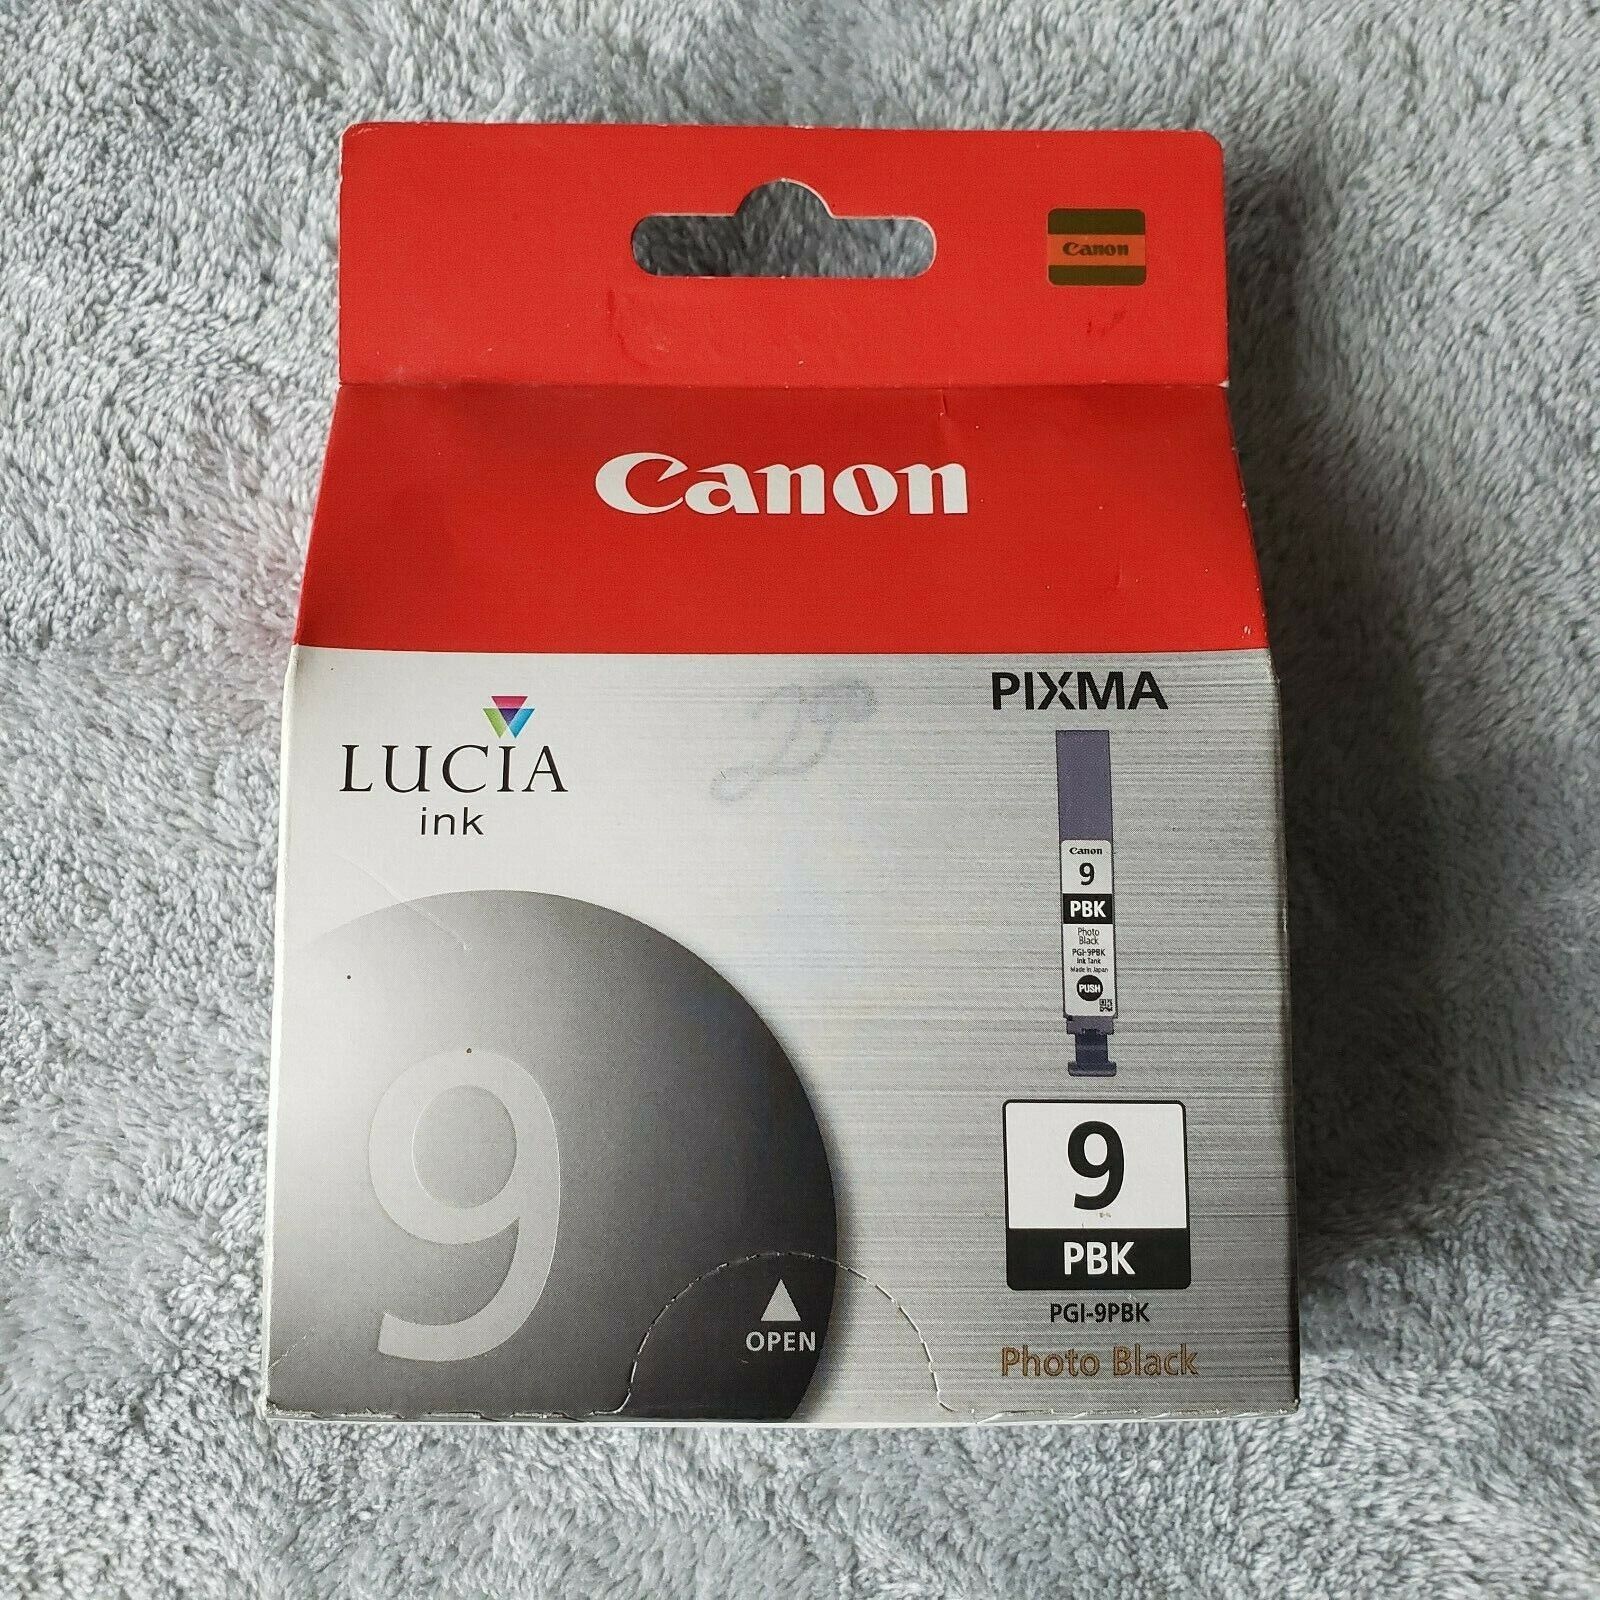 Canon PIXMA LUCIA Ink 9 PBK Black Ink Tank Cartridge NEW